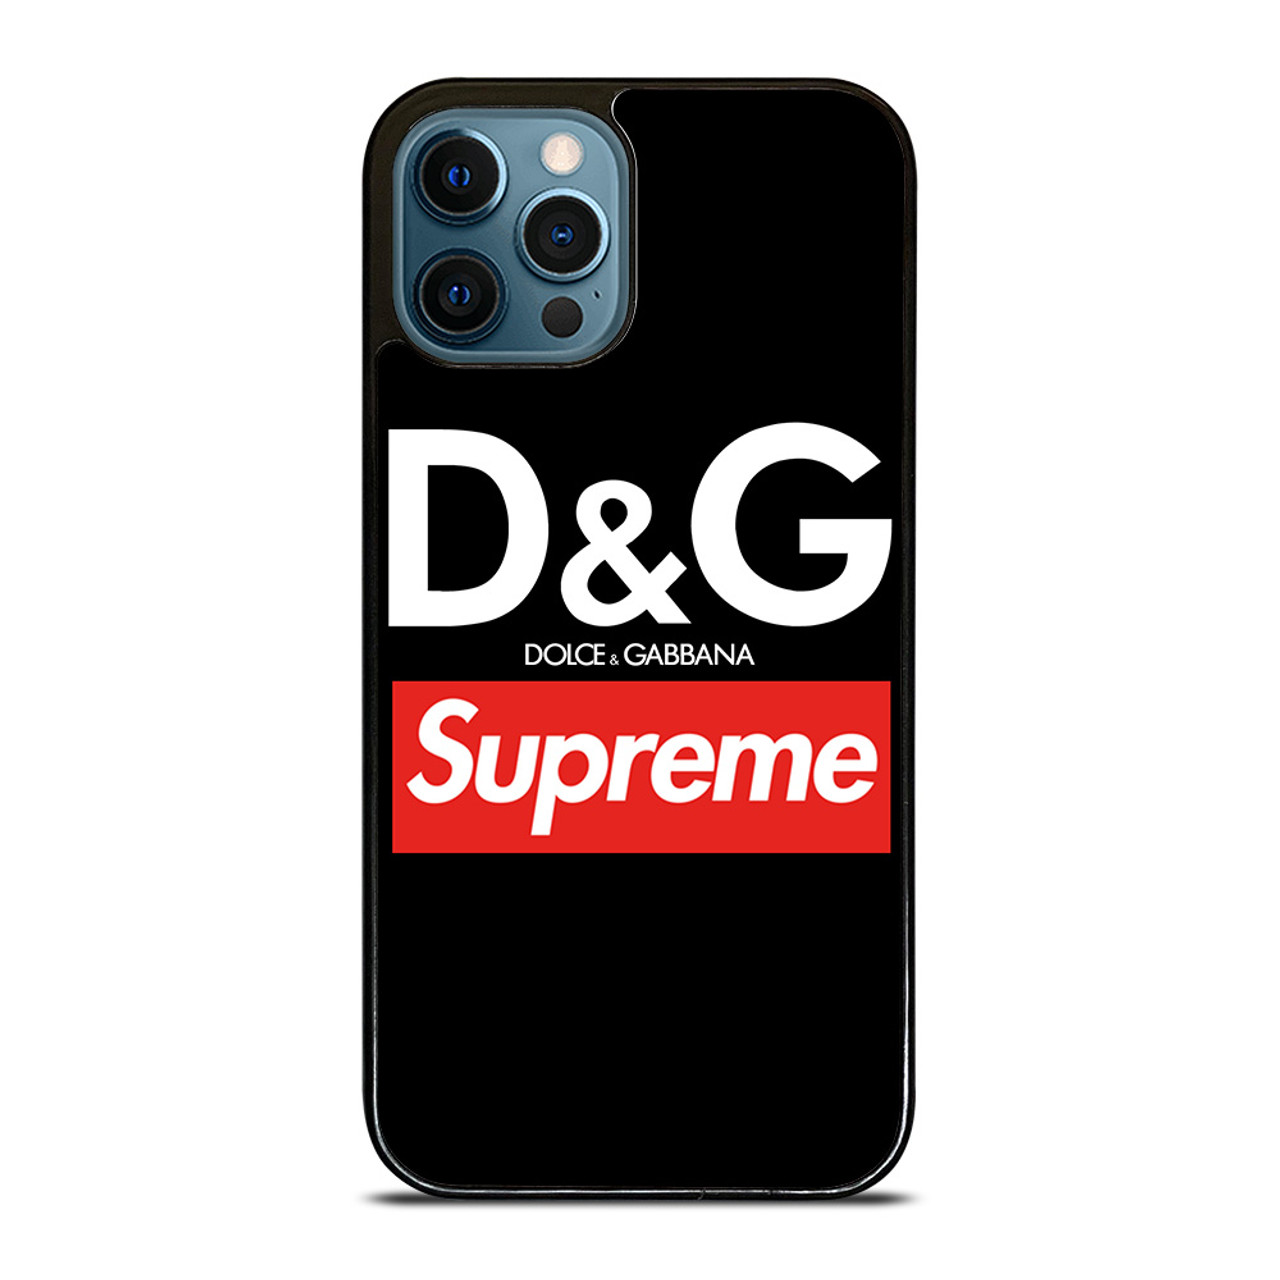 Supreme - iPhone 12 Pro Max, Smartphone cases